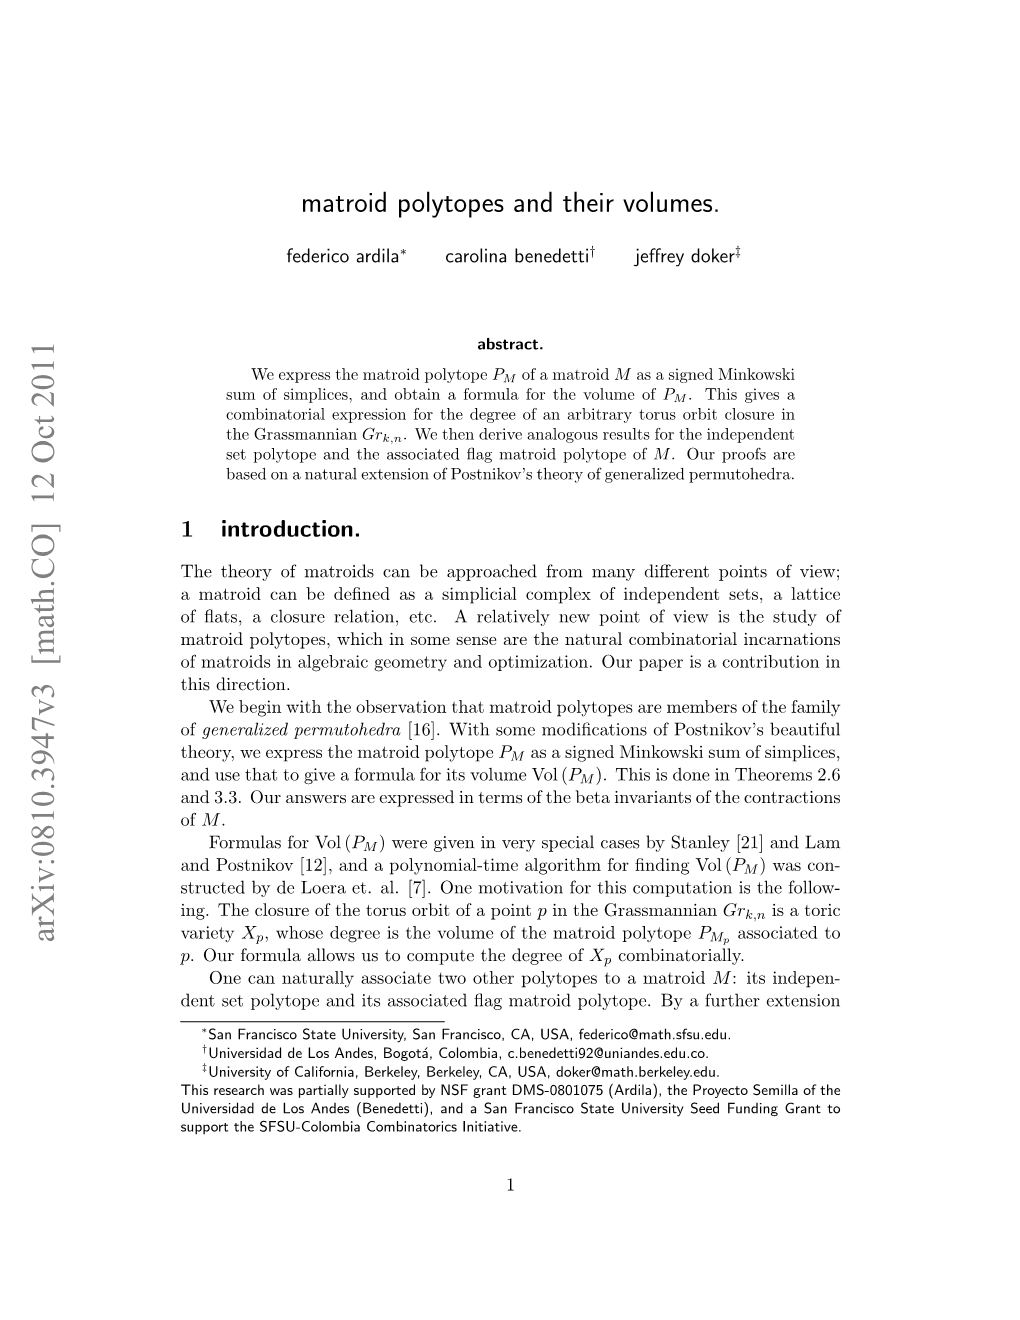 Matroid Polytopes and Their Volumes